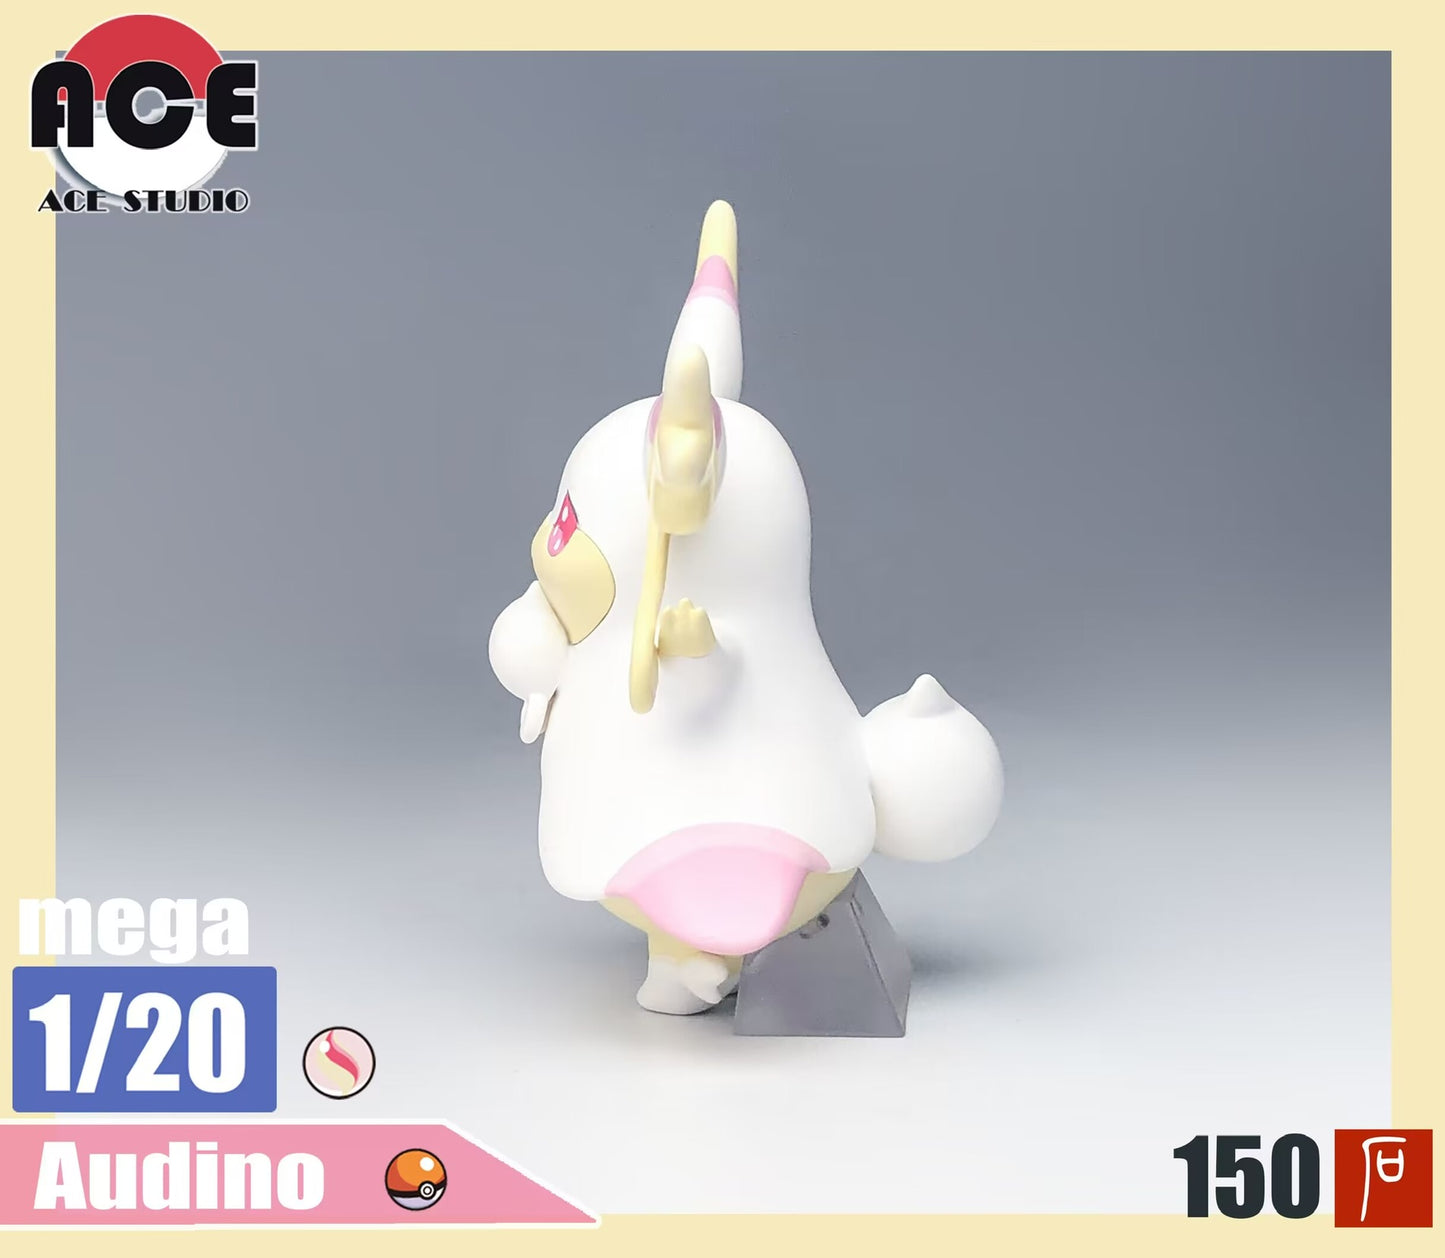 [PREORDER CLOSED] 1/20 Scale World Figure [ACE] - Mega Audino